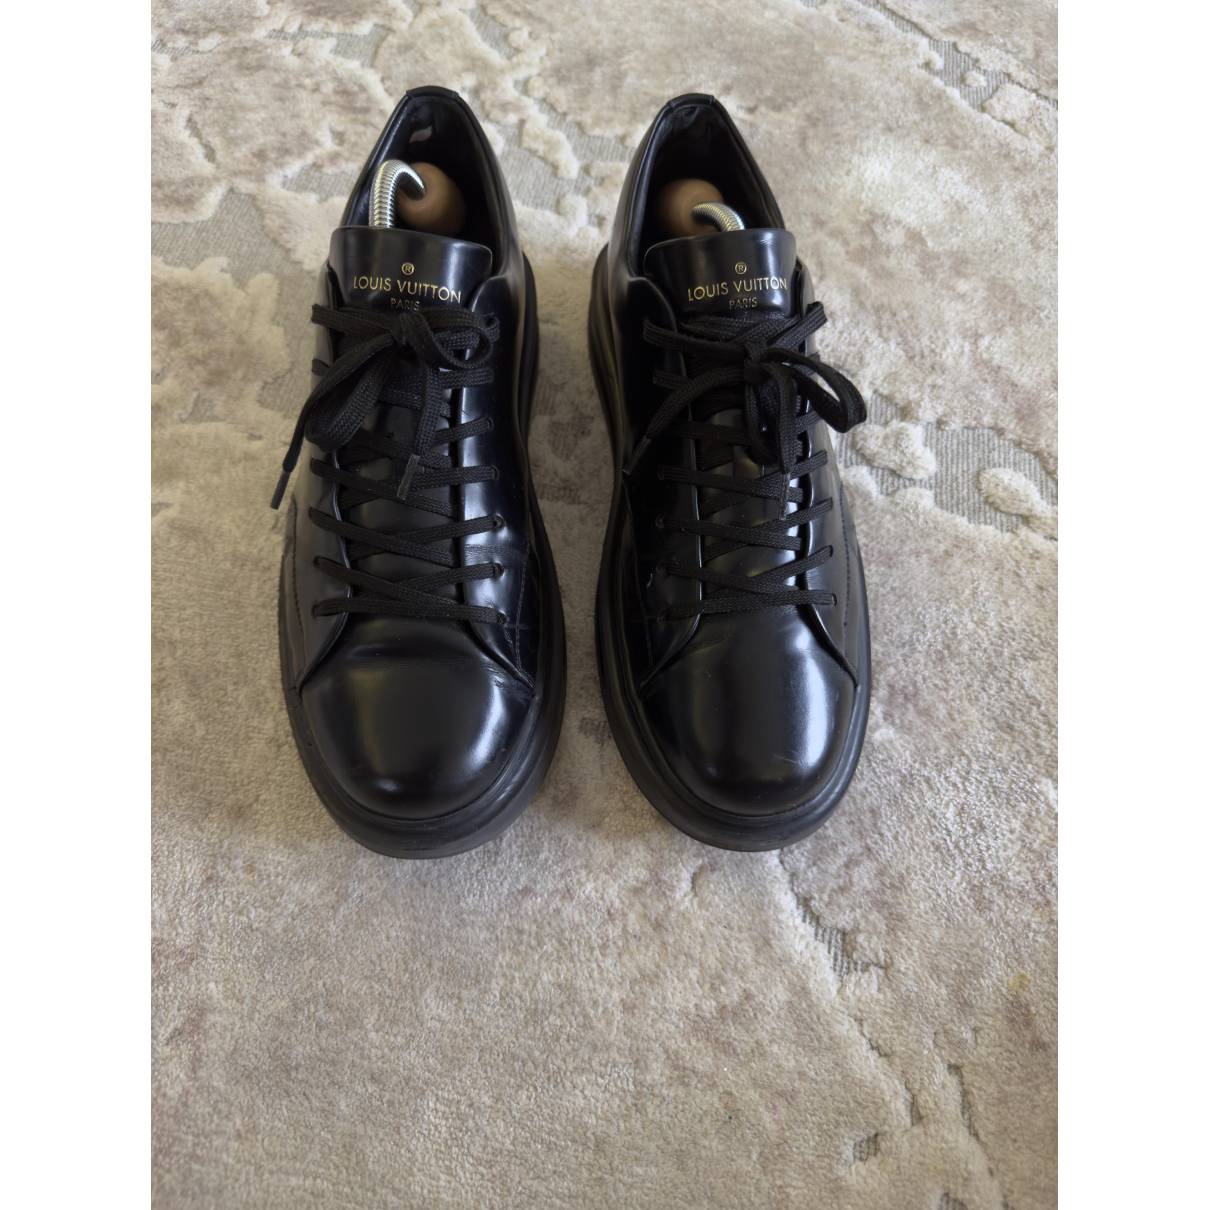 Louis Vuitton Men's Black Leather Beverly Hills Sneaker